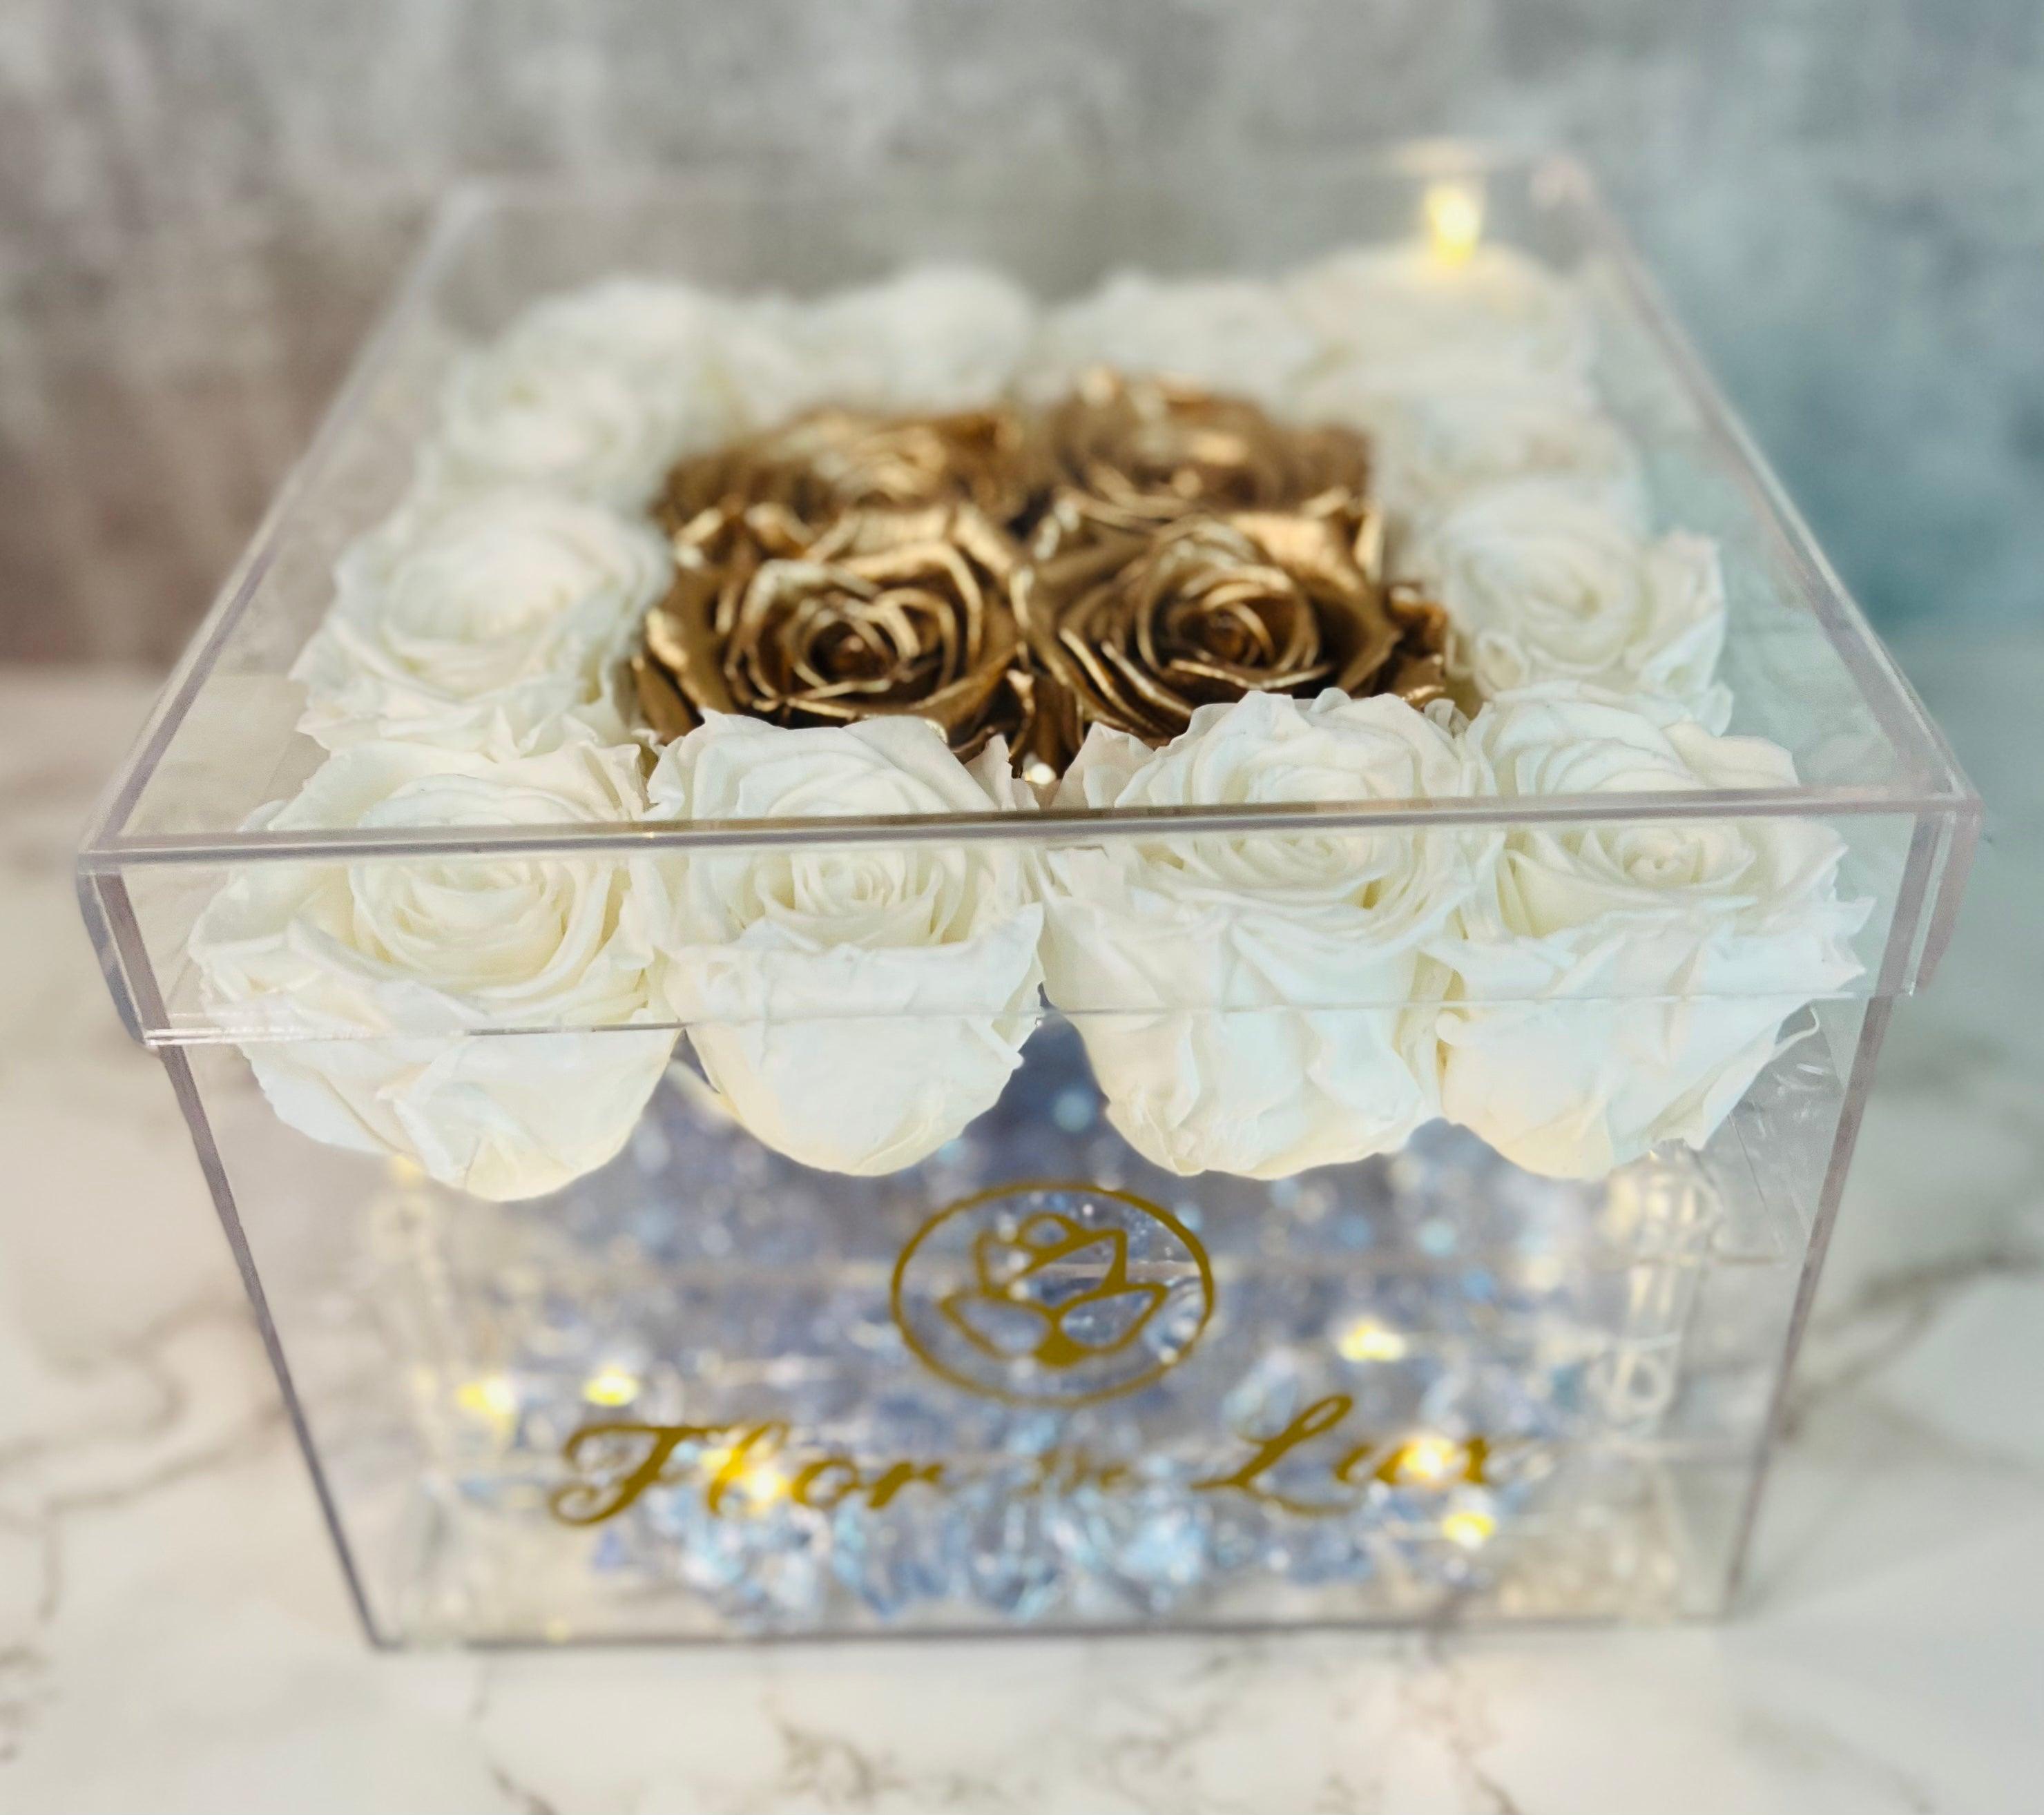 Medium Acrylic Square Box - Preserved Roses - Flor De Lux